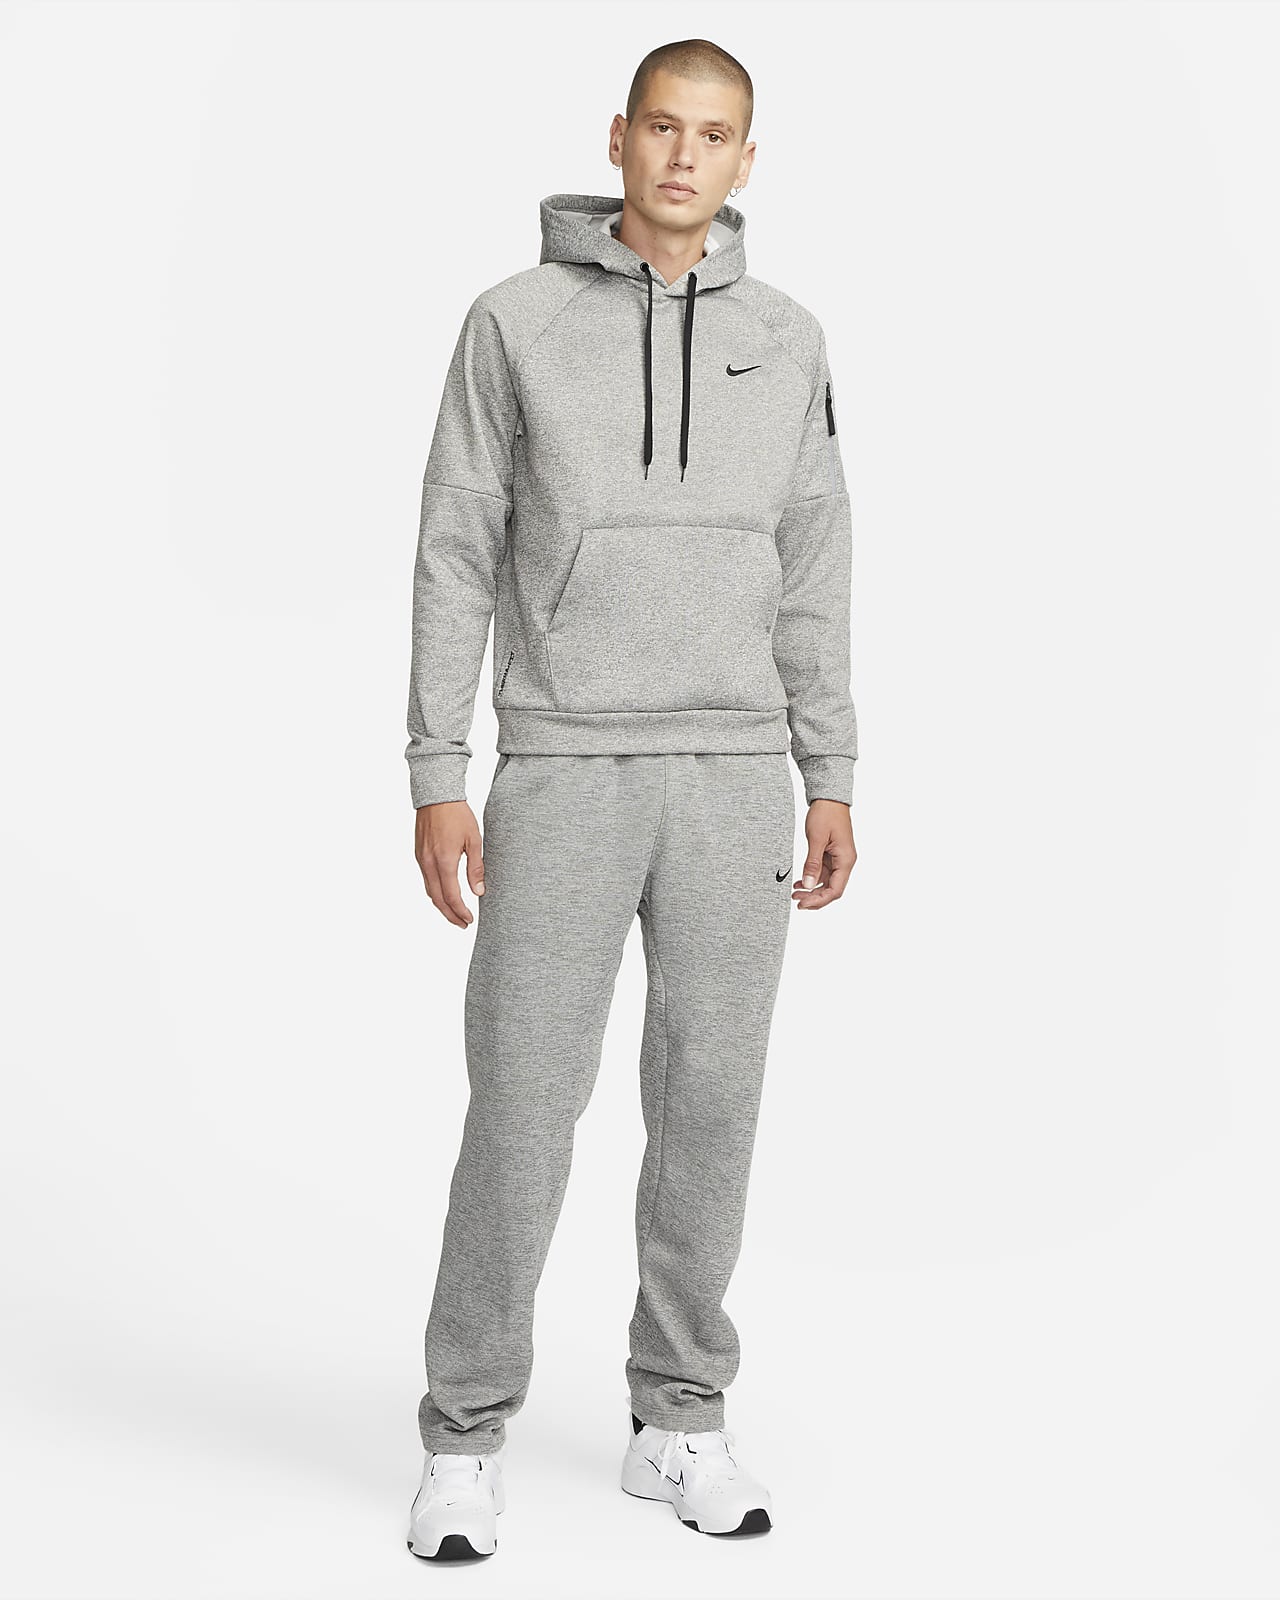 Nike Therma Men's Therma-FIT Hooded Fitness Sweatshirt. Nike LU